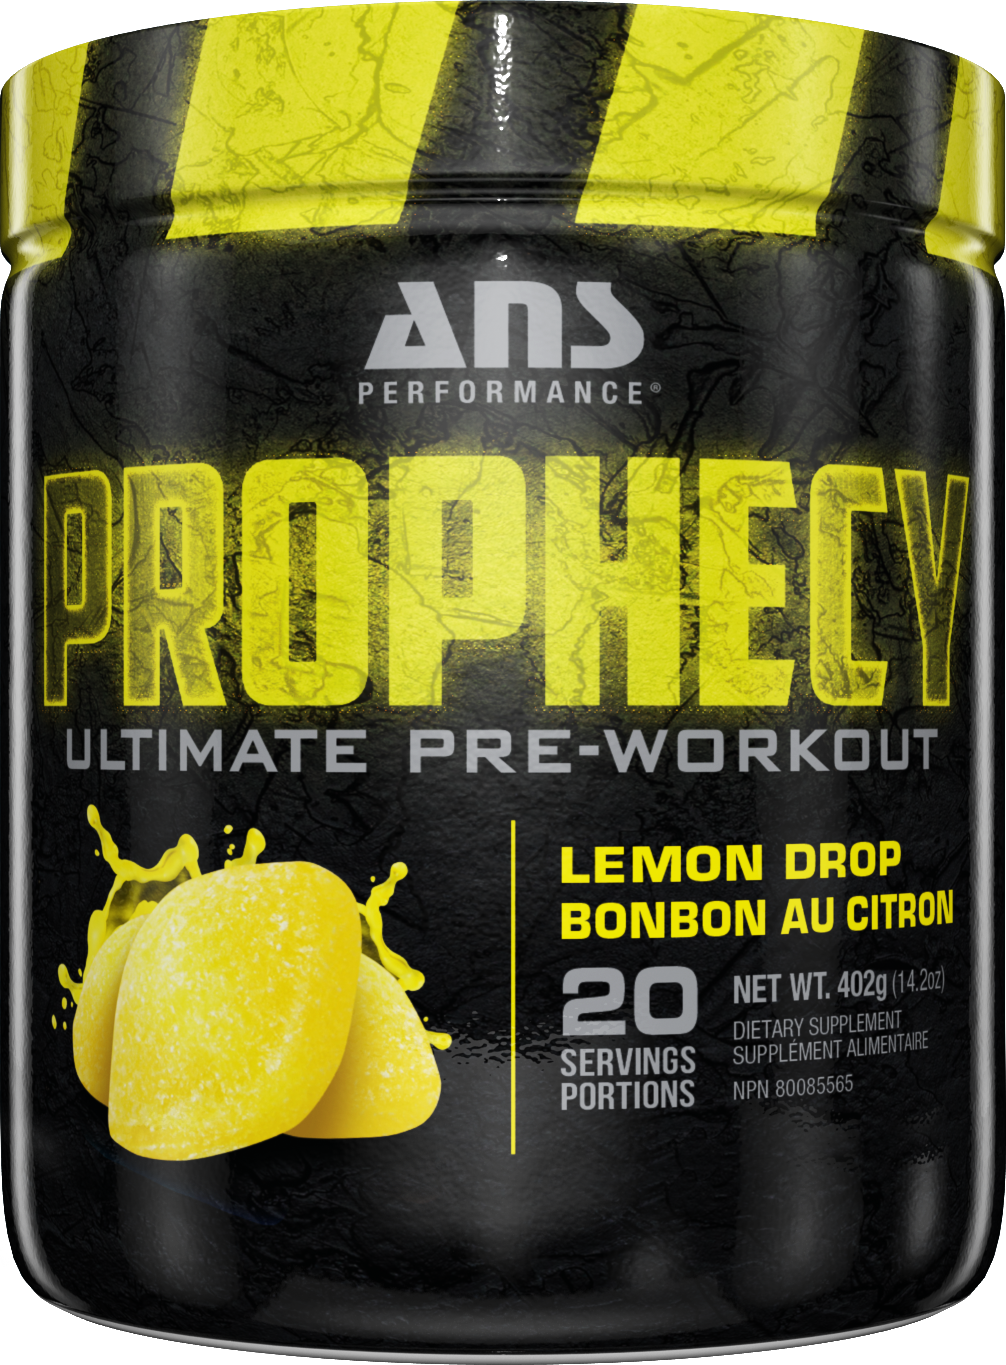 PROPHECY™ - Lemon Drop - ProCare Outlet by ANSperformance